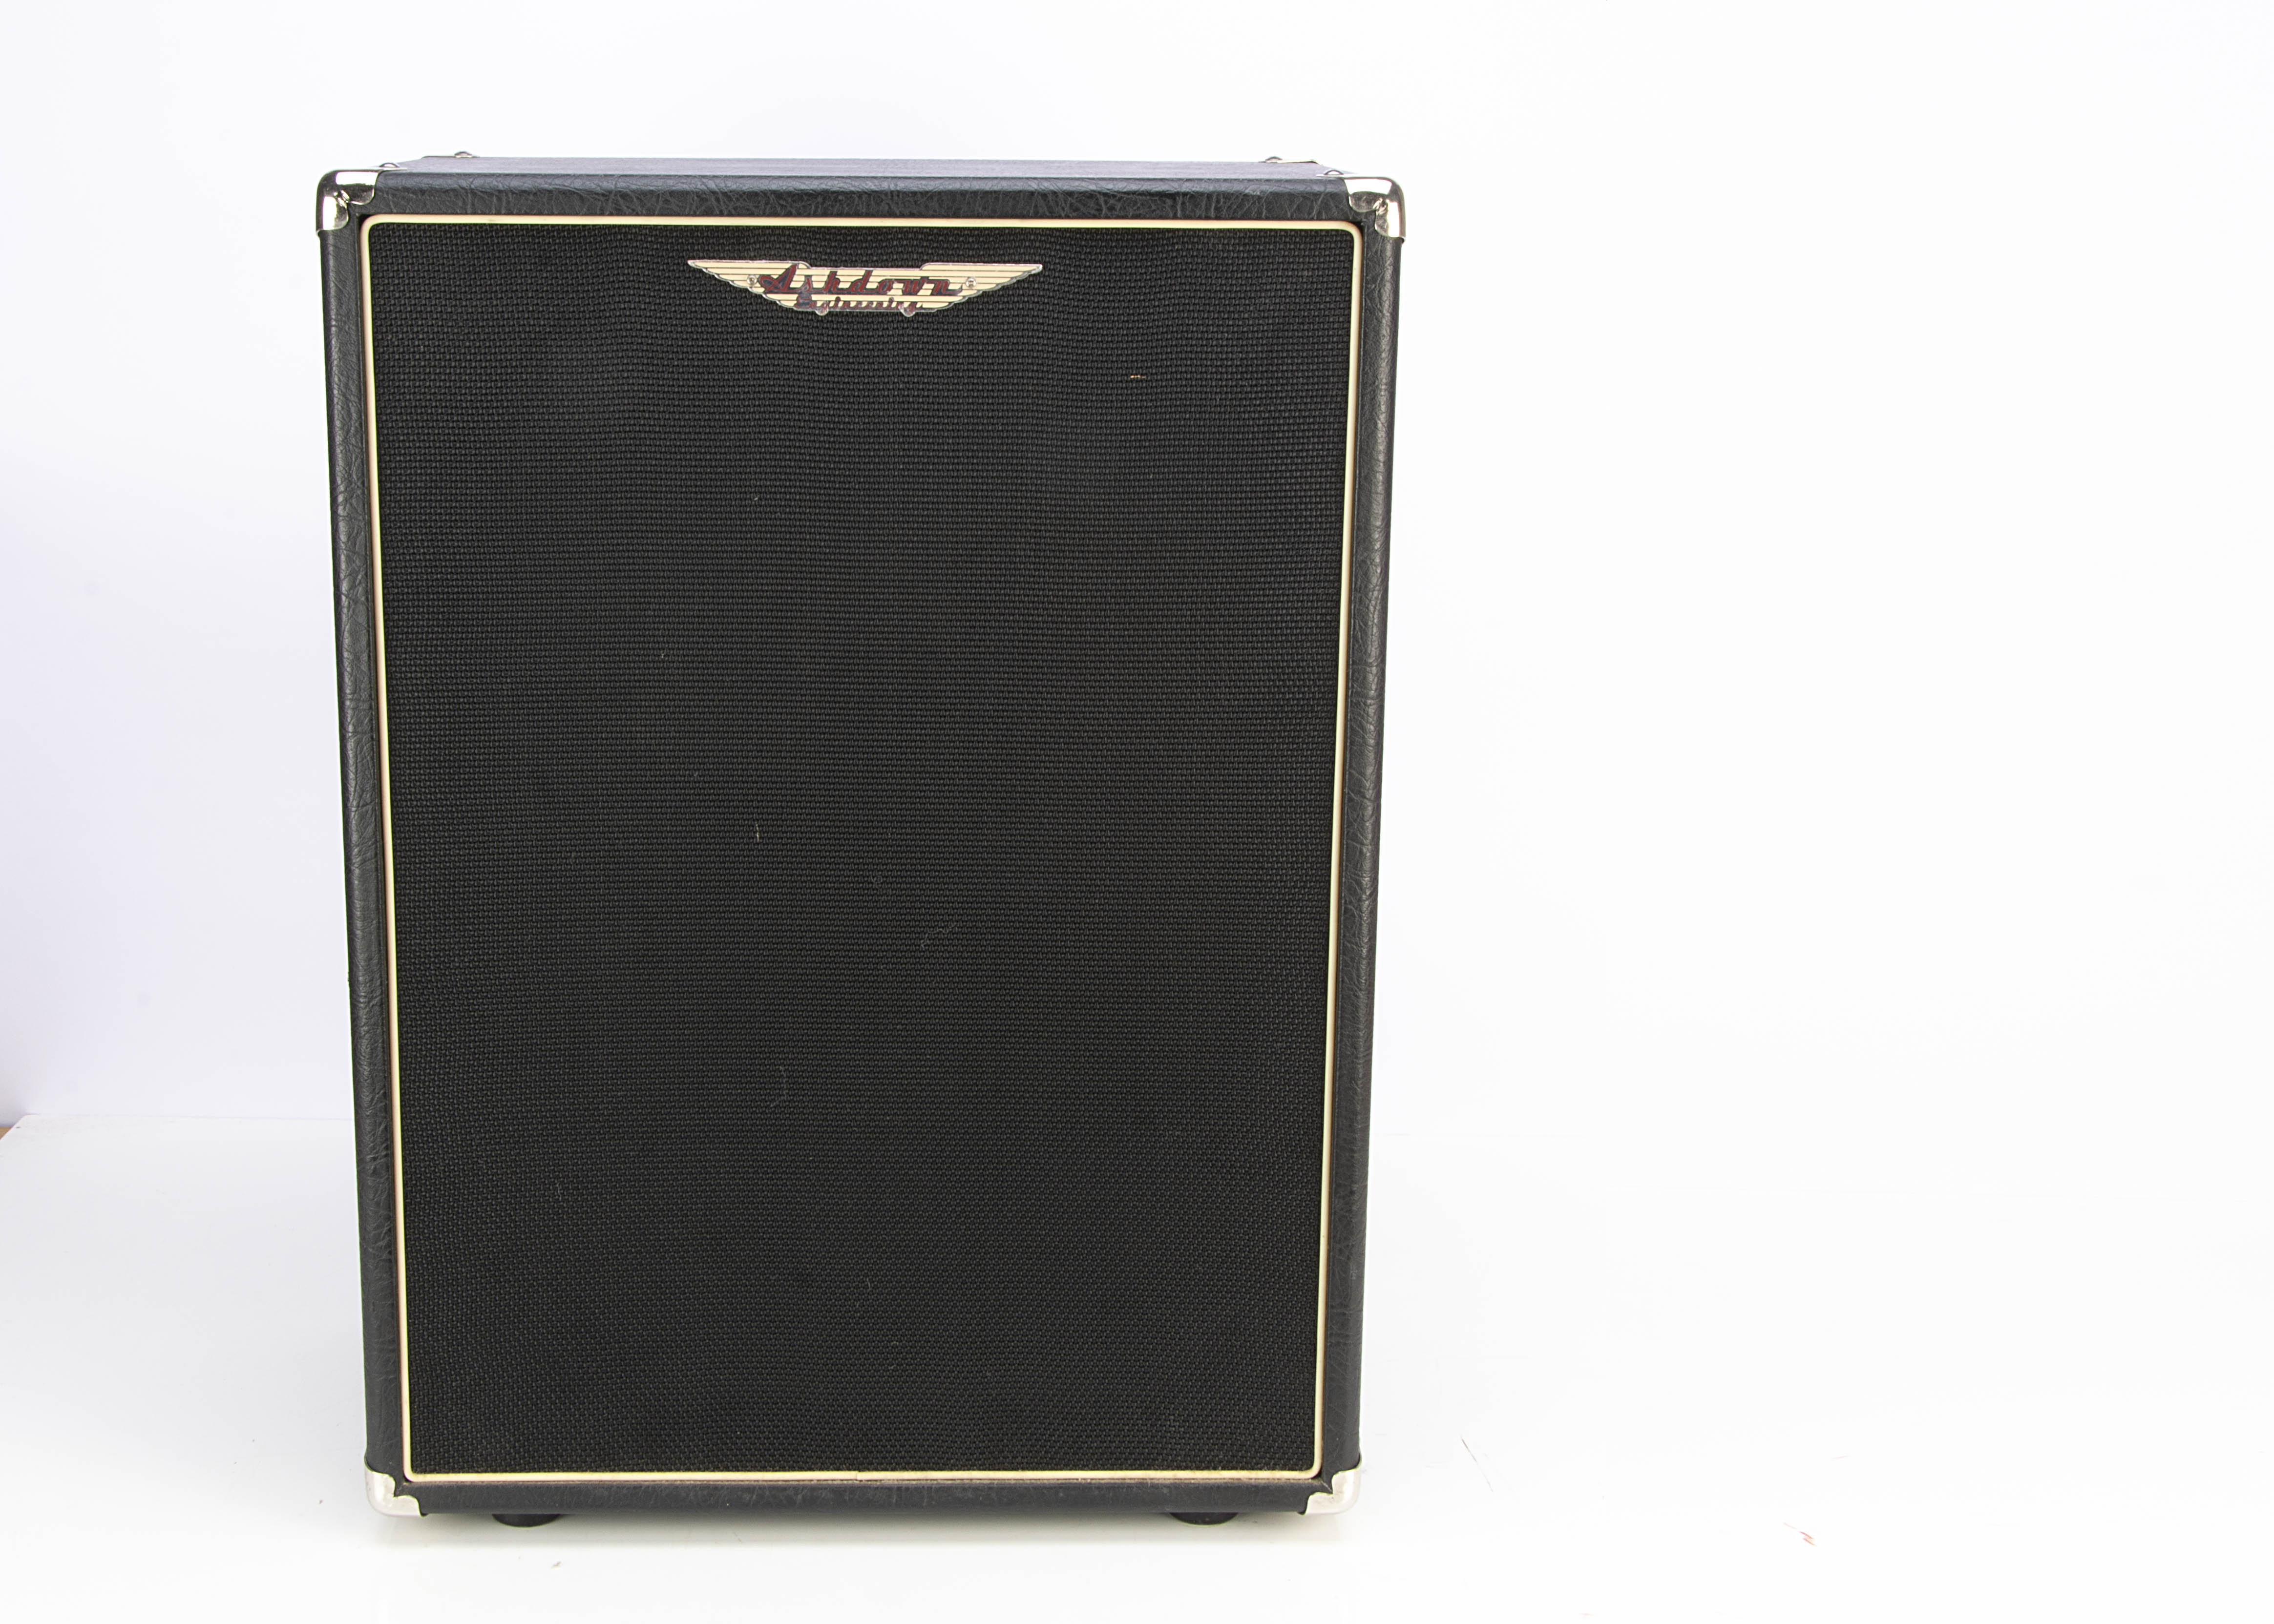 Ashdown Amplifier / Speaker, an Ashdown Engineering Five 15 Mini Rig-100, bass guitar amp combo,